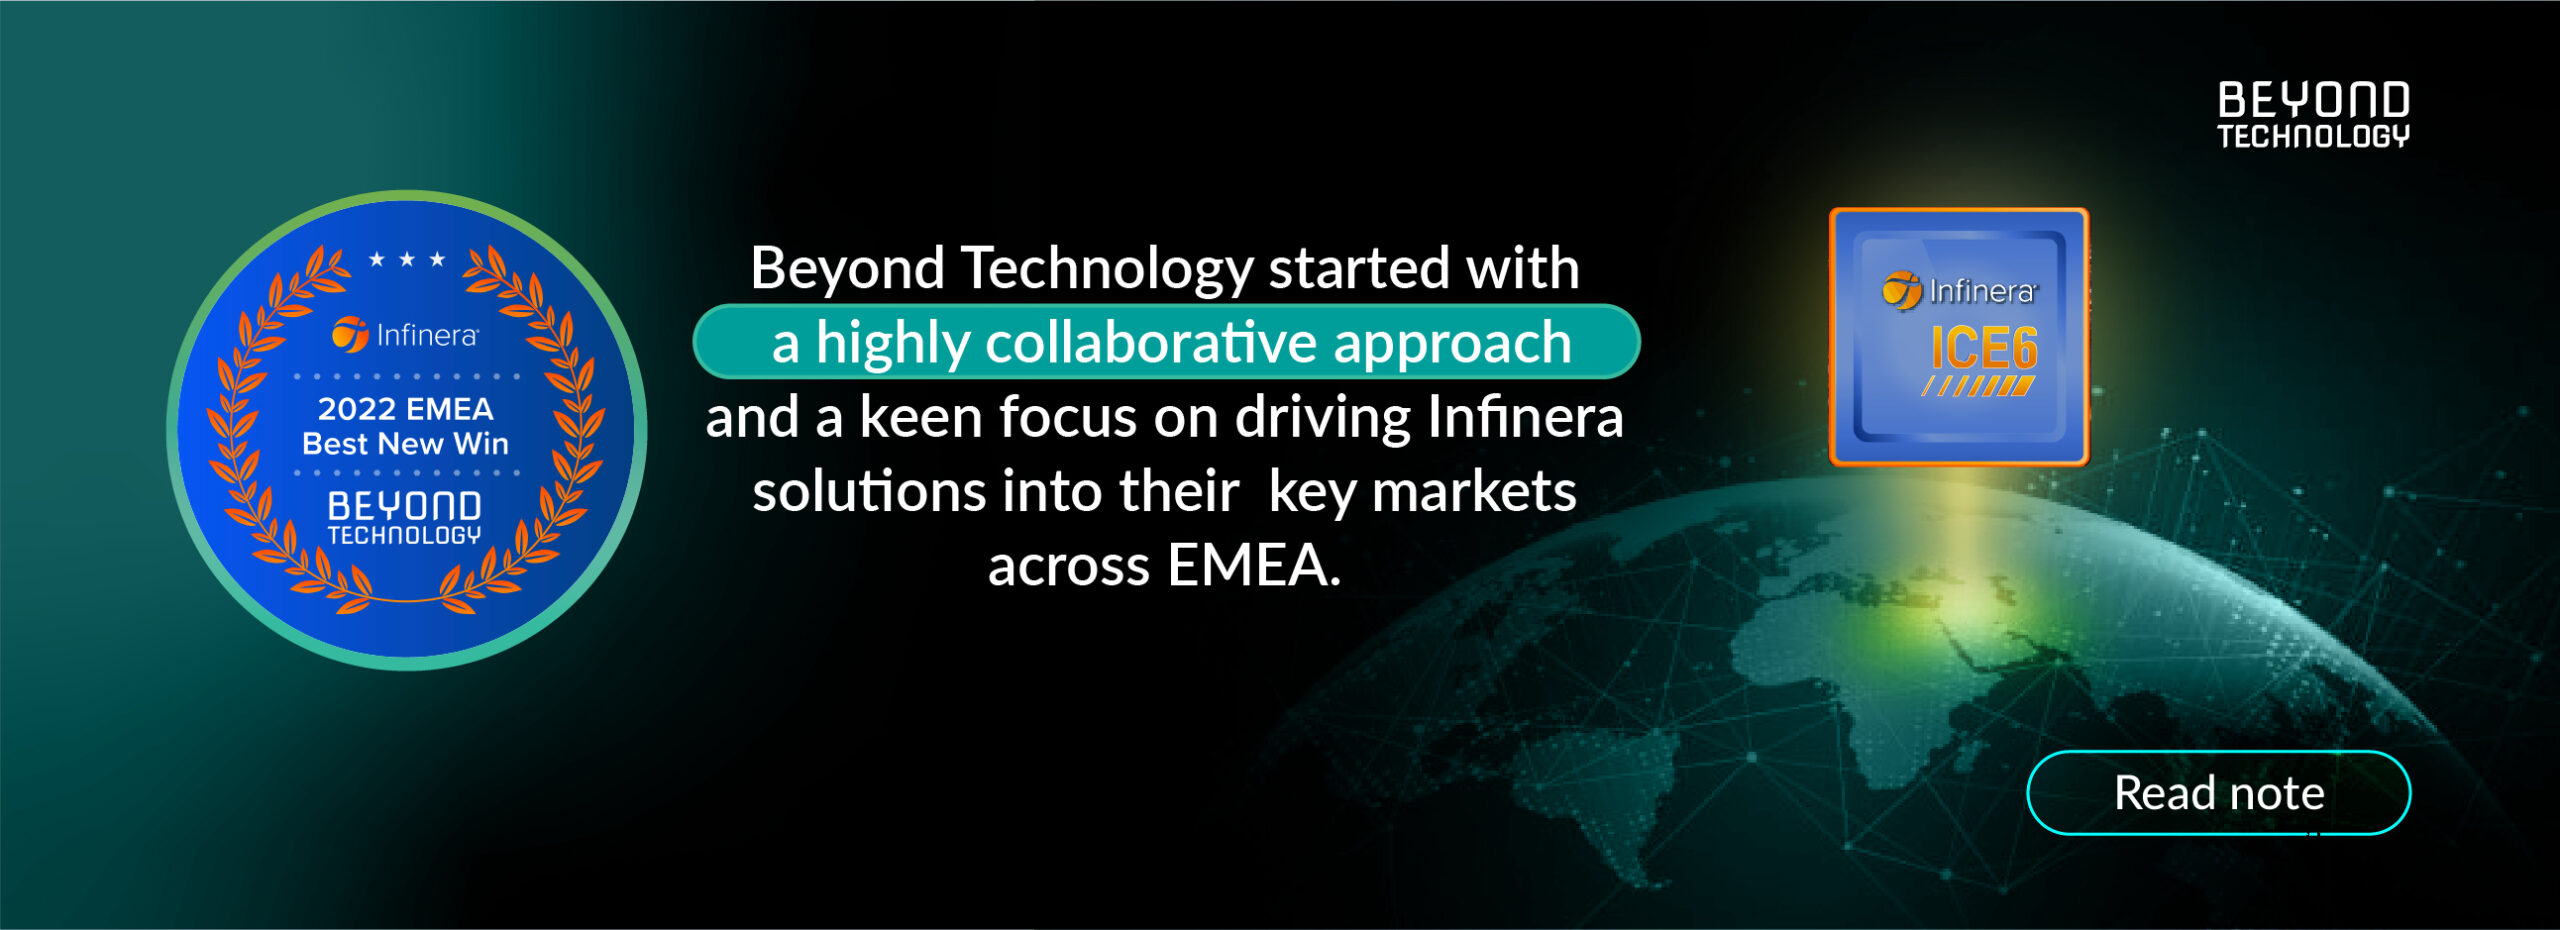 Infinera-awards-Beyond-Technology-with-EMEA-Best-New-Win